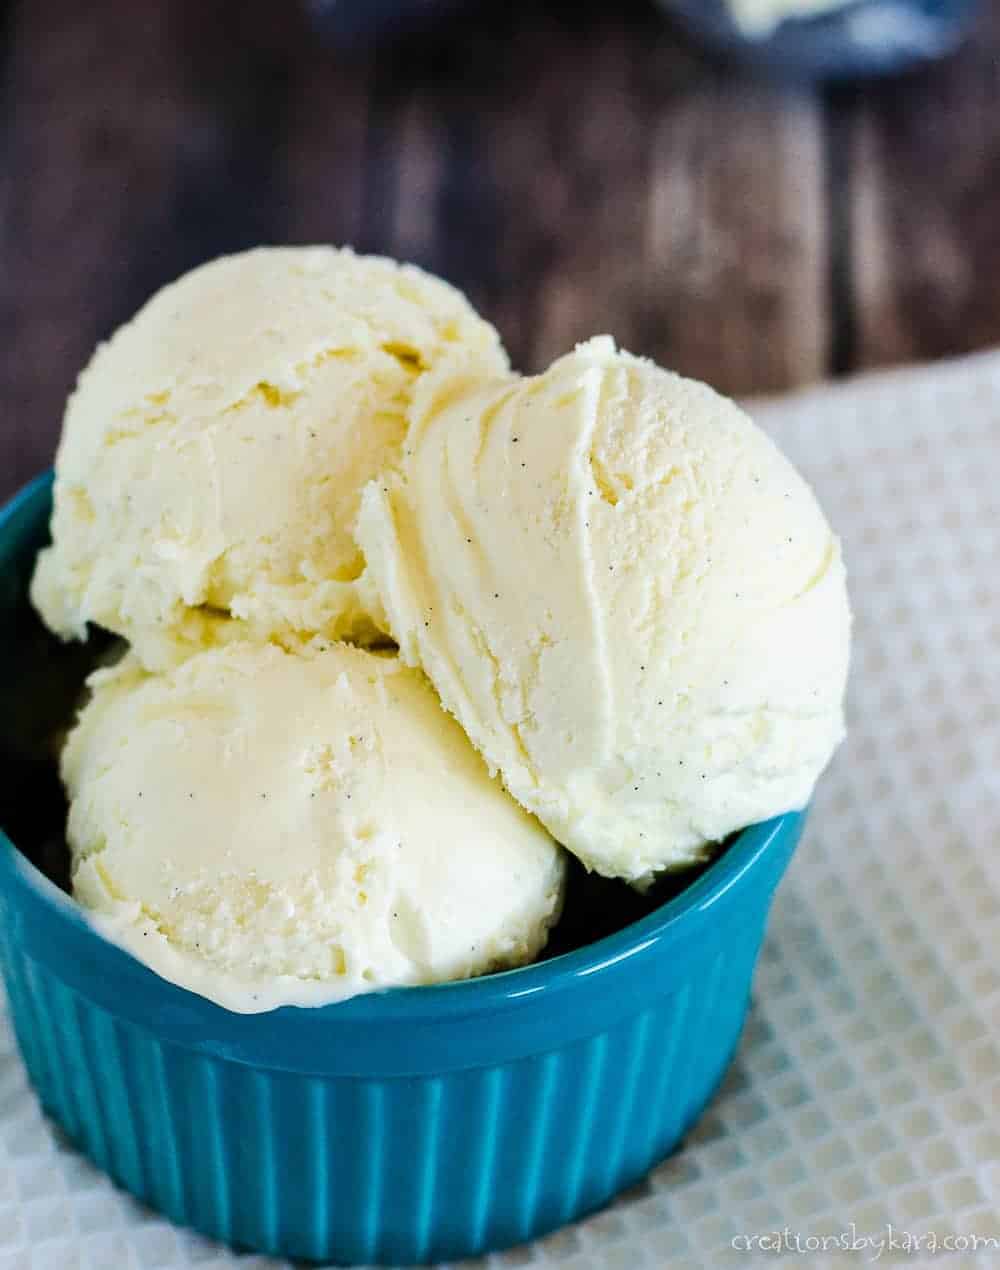 Cuisinart Ice Cream Maker Recipes - Ice Cream From Scratch